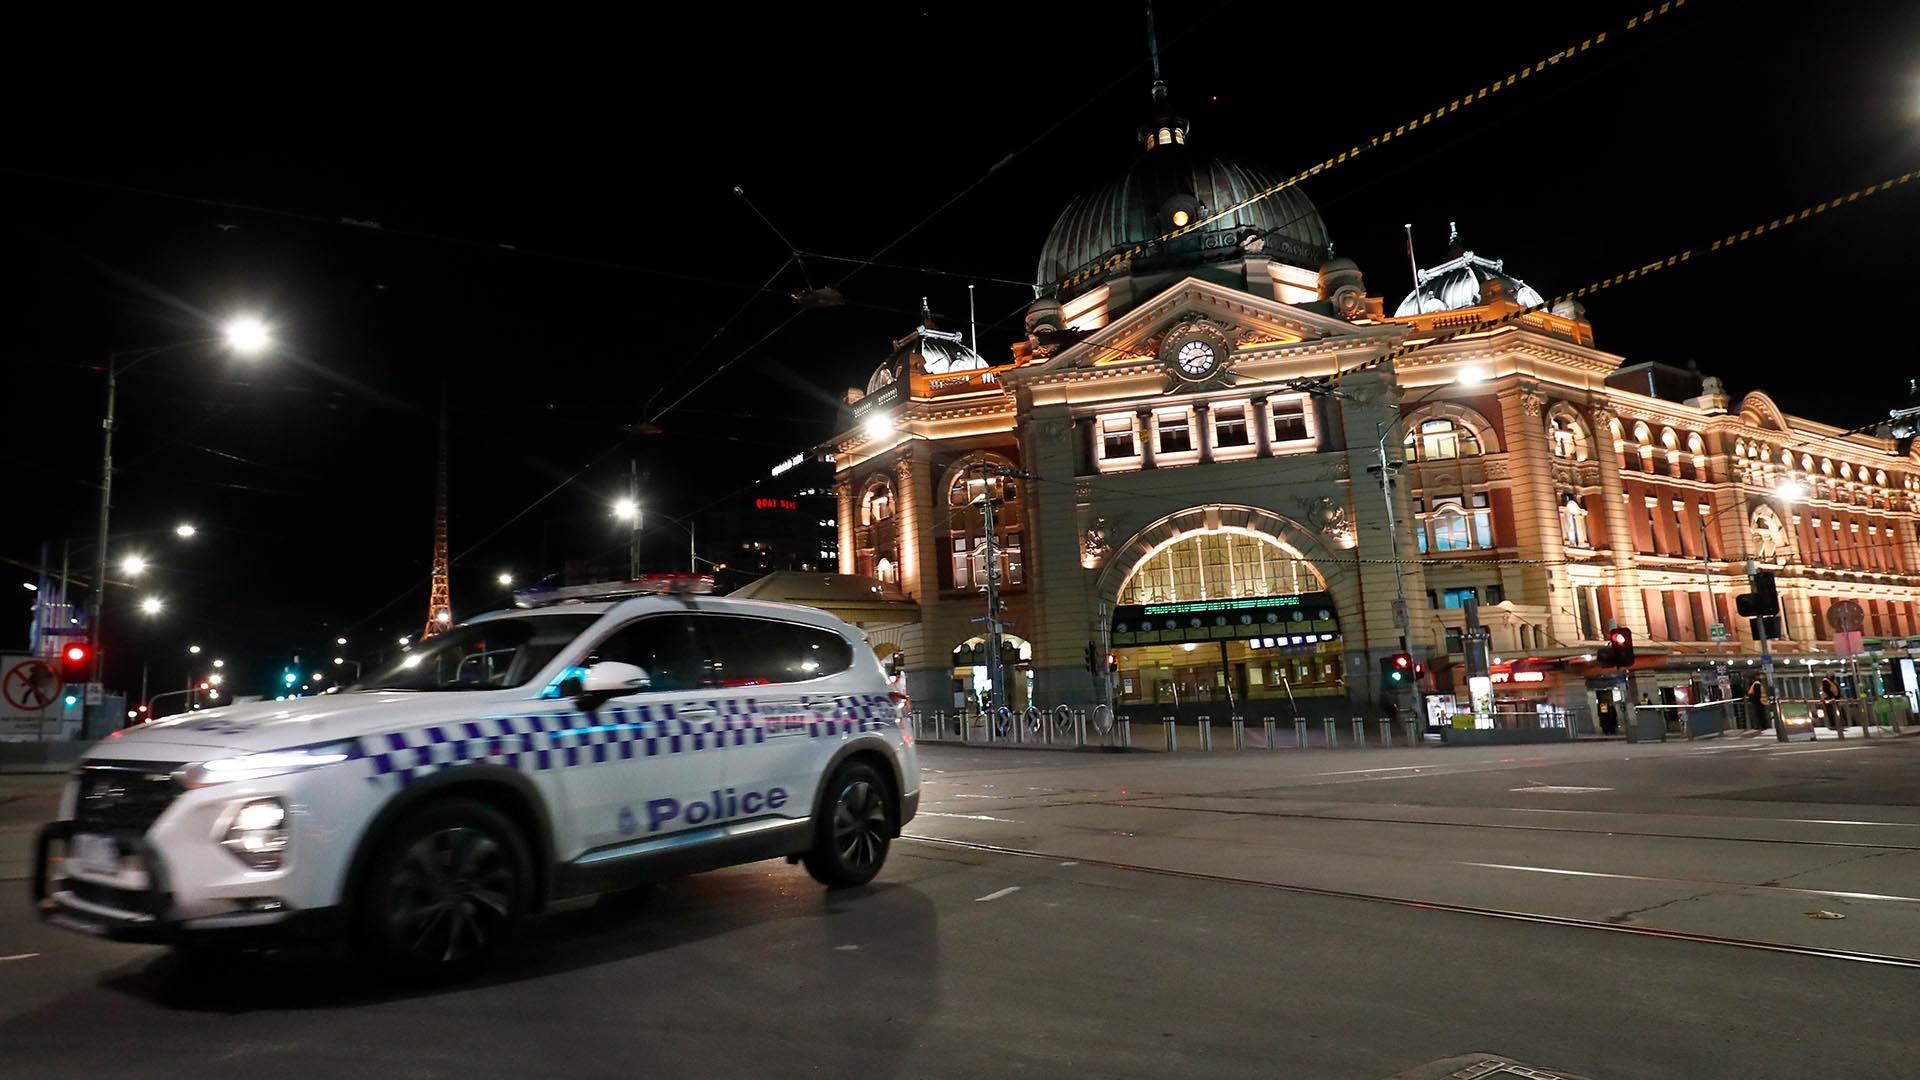 Curfew imposed on Melbourne, Australia to stop coronavirus spreading